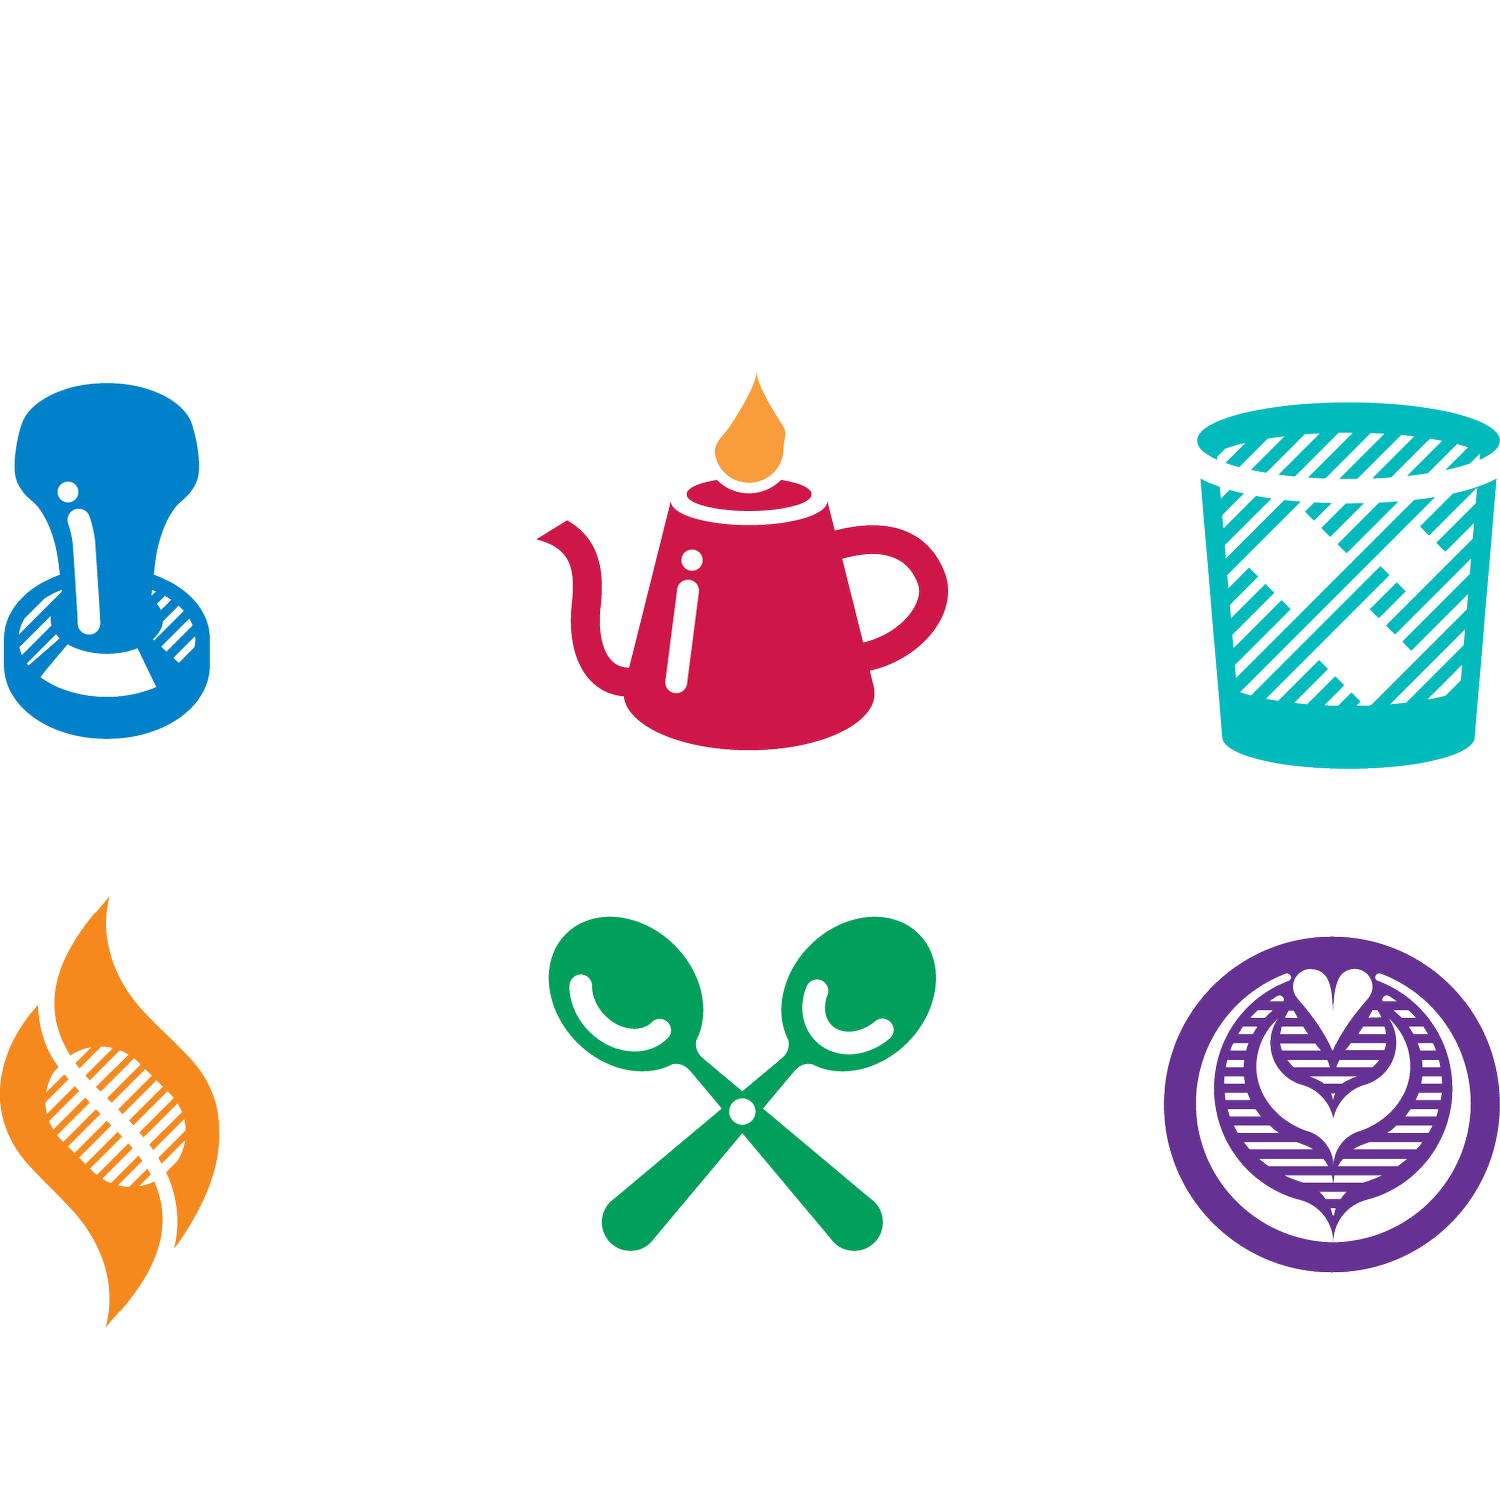 U.S. Coffee Championships